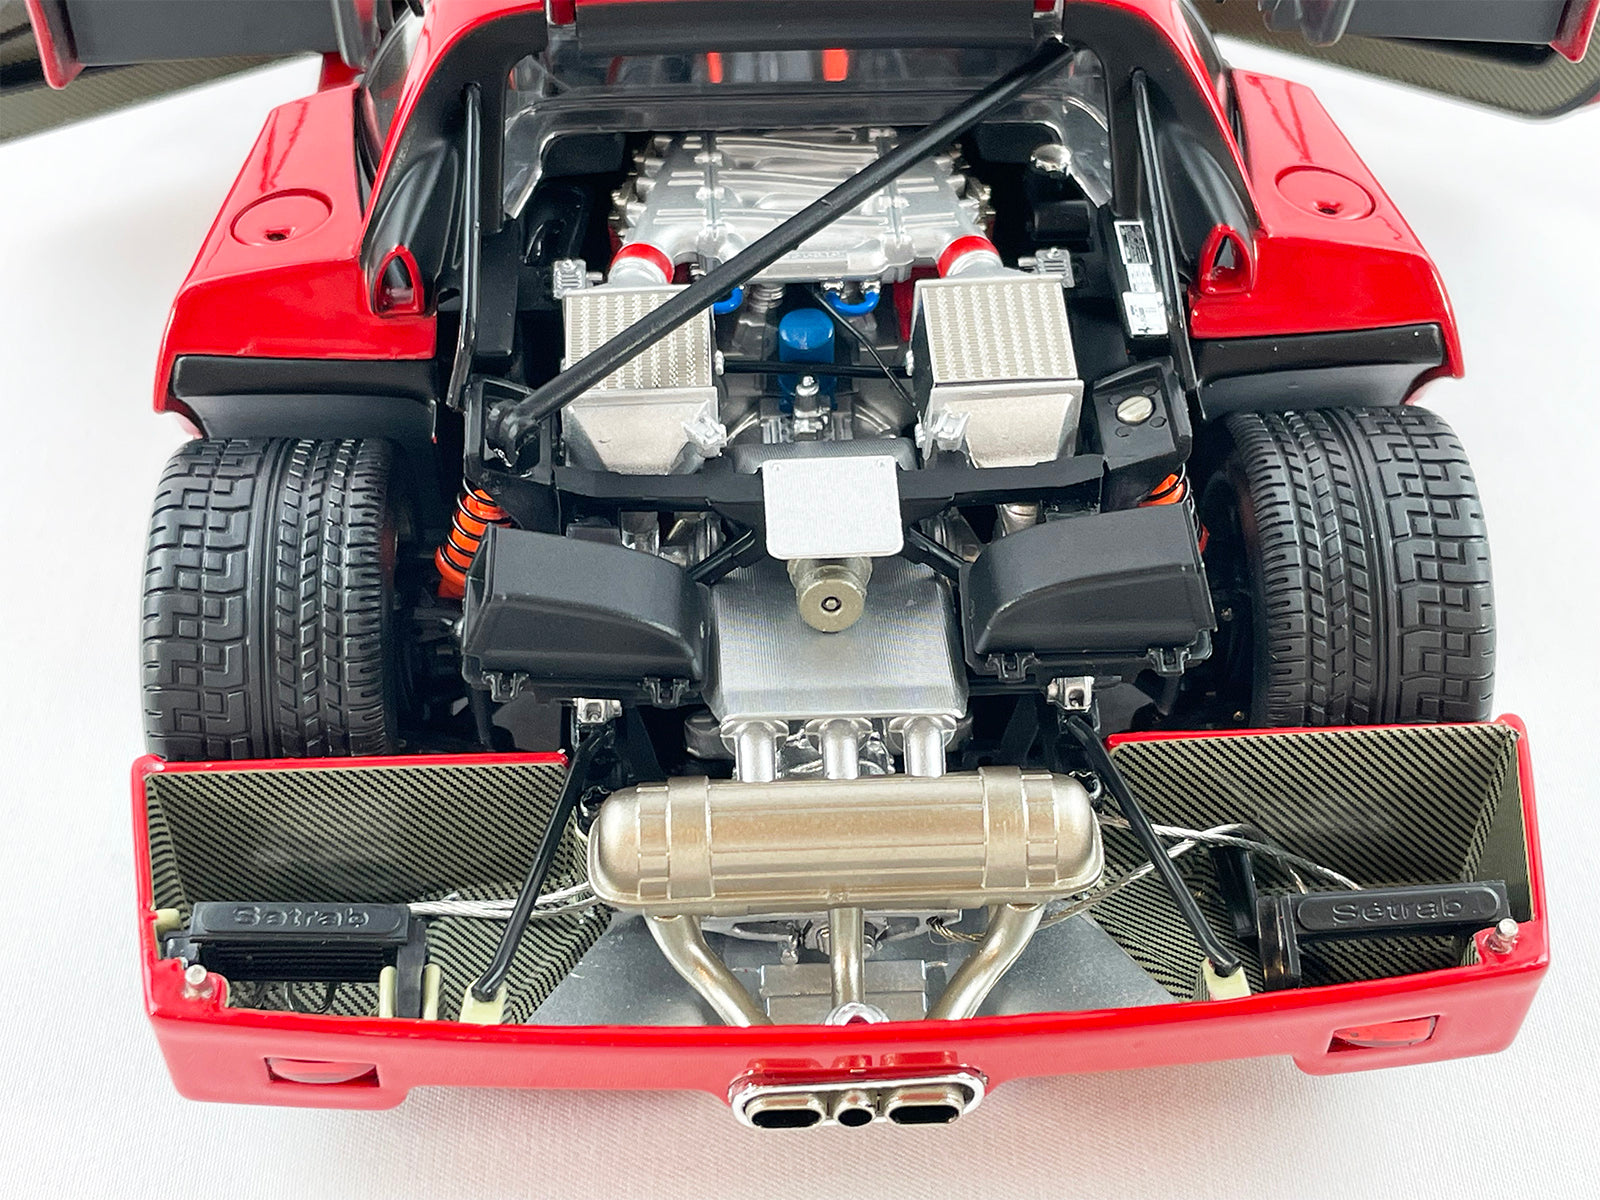 Kyosho 1:18 Ferrari F40 1987 Red Interior Full Open Diecast 08416R